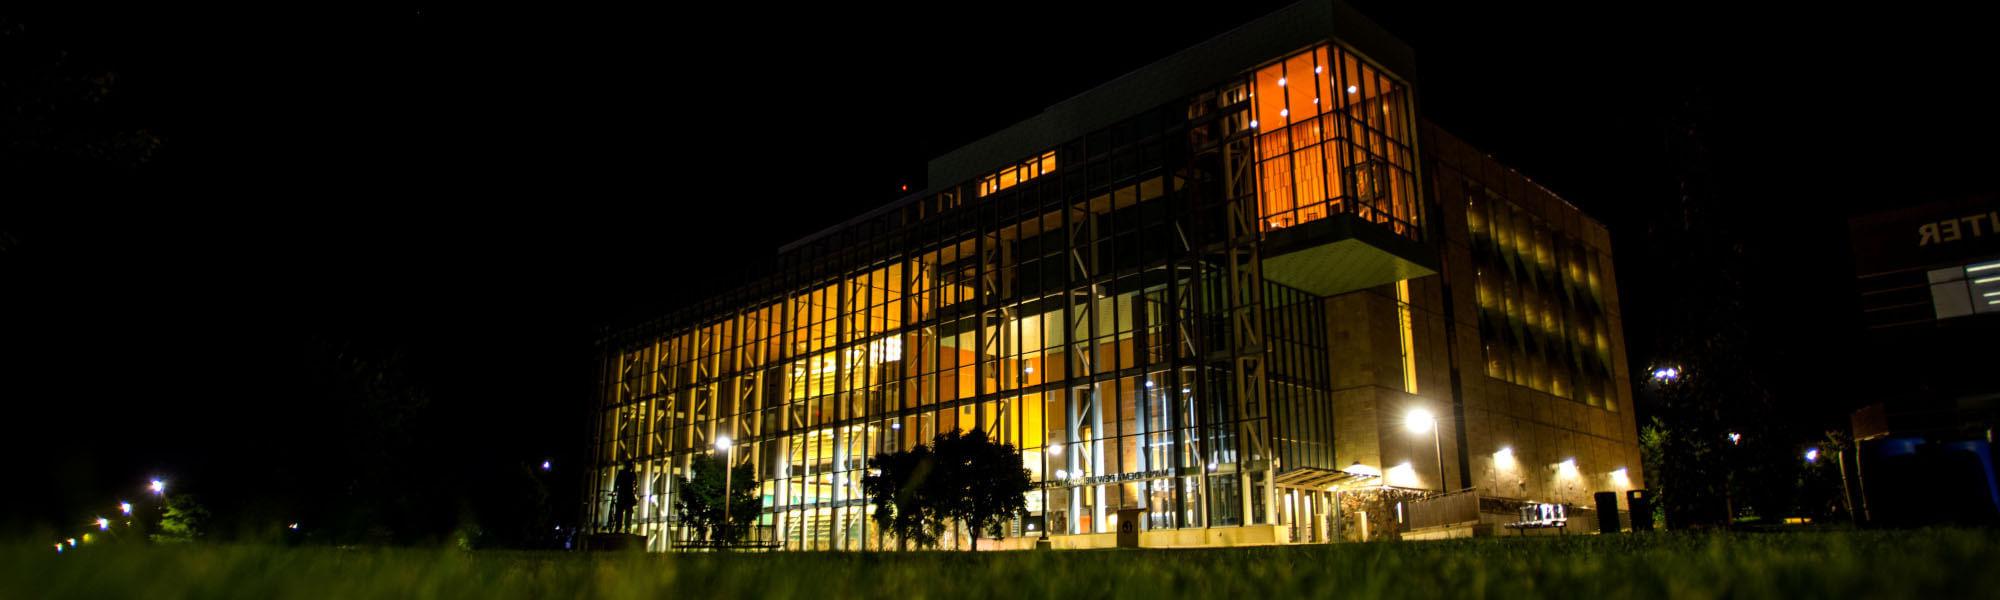 GVSU campus at night.